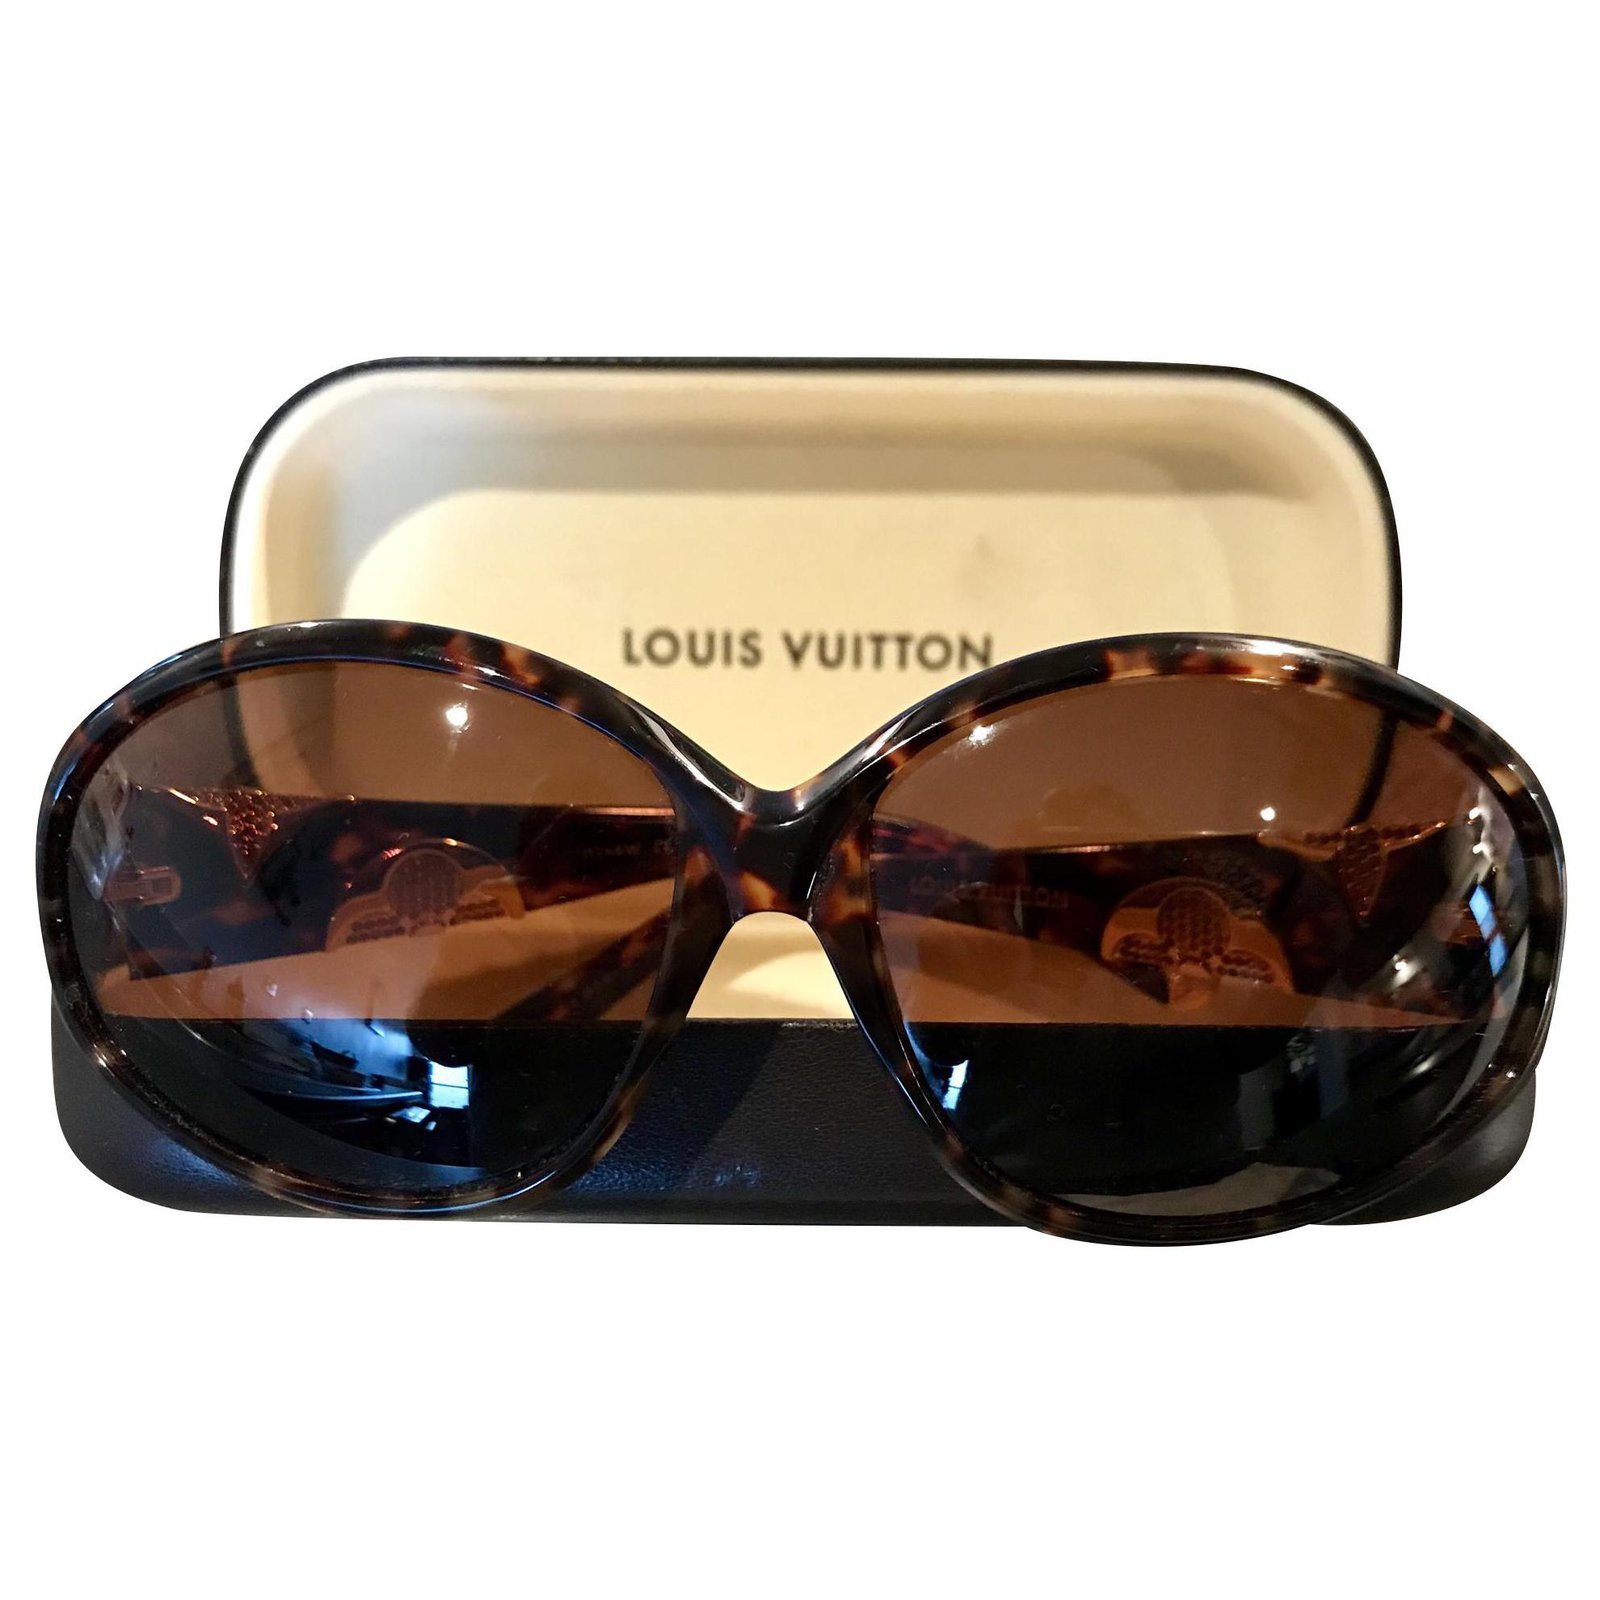 Anagails Upcycled Louis Vuitton Patch Tan/Leopard Bahama Sun Visor